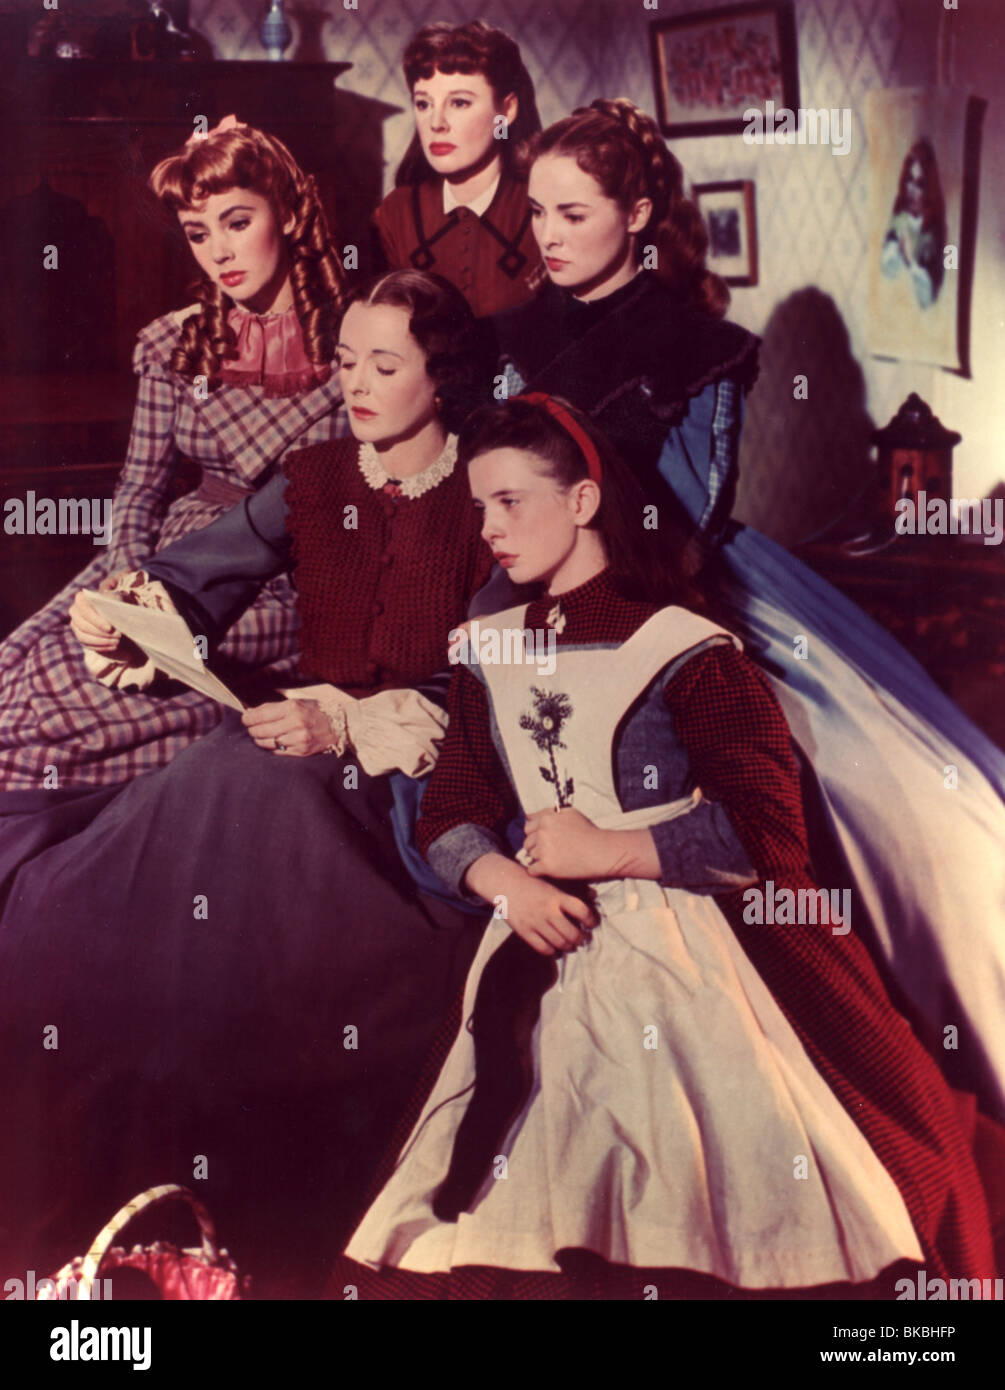 LITTLE WOMEN (1949) ELIZABETH TAYLOR, MARY ASTOR, JUNE ALLYSON, JANET LEIGH, MARGARET O'BRIEN LLTW 001CP Stock Photo